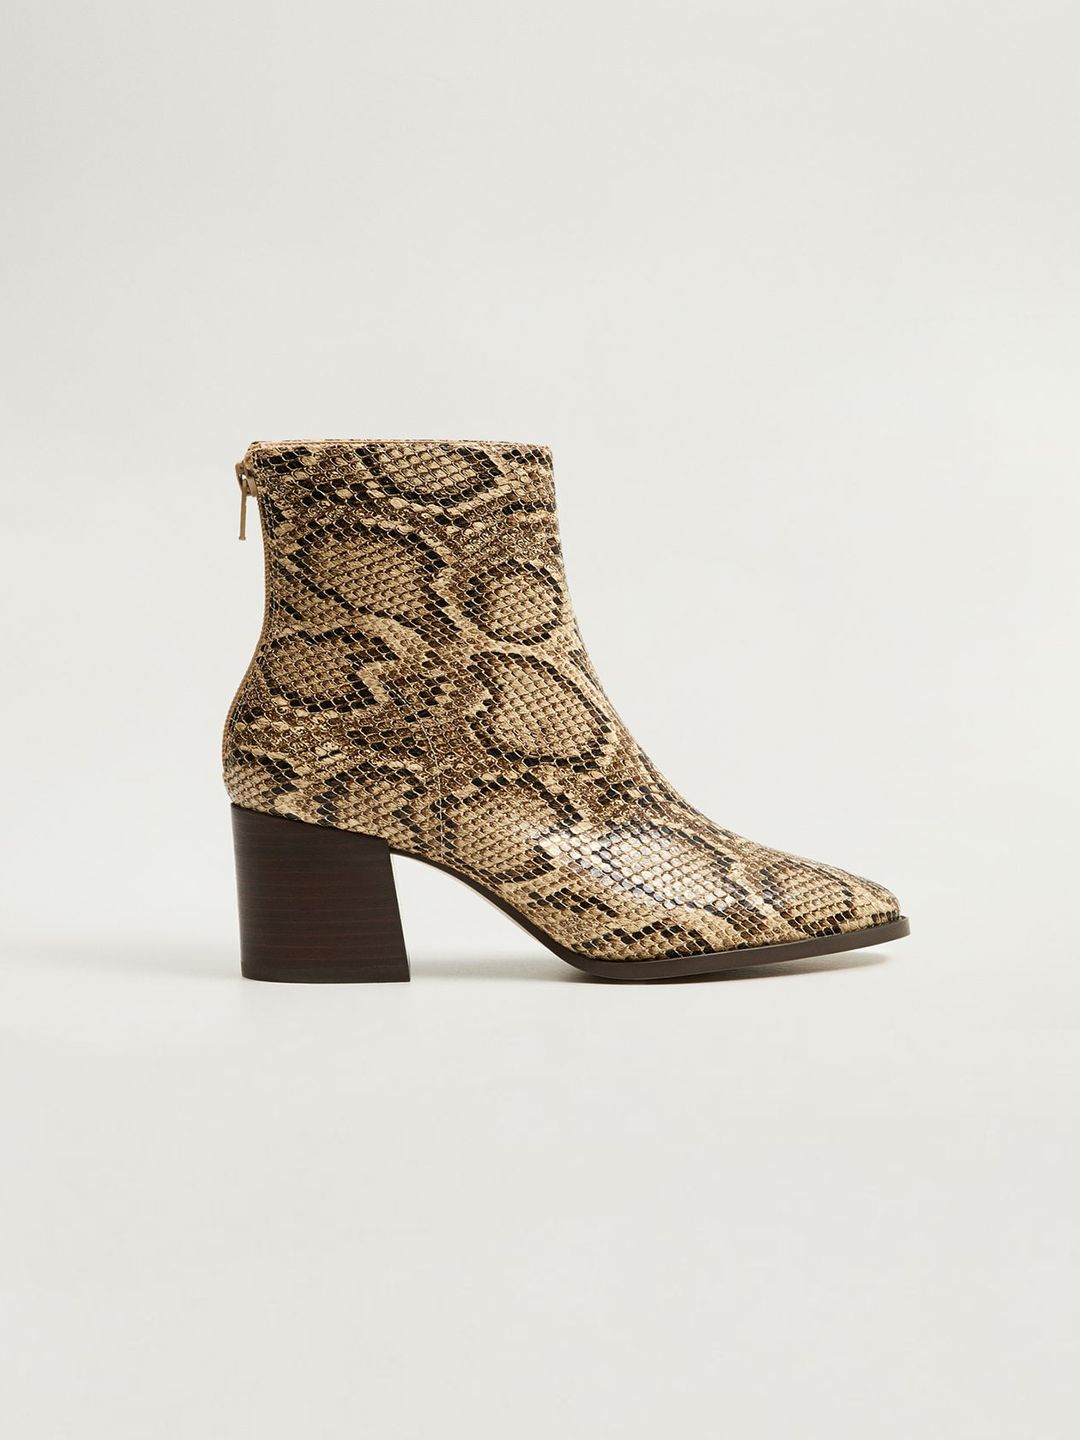 MANGO Women Beige & Coffee Brown Snakeskin Textured Mid-Top Heeled Boots Price in India